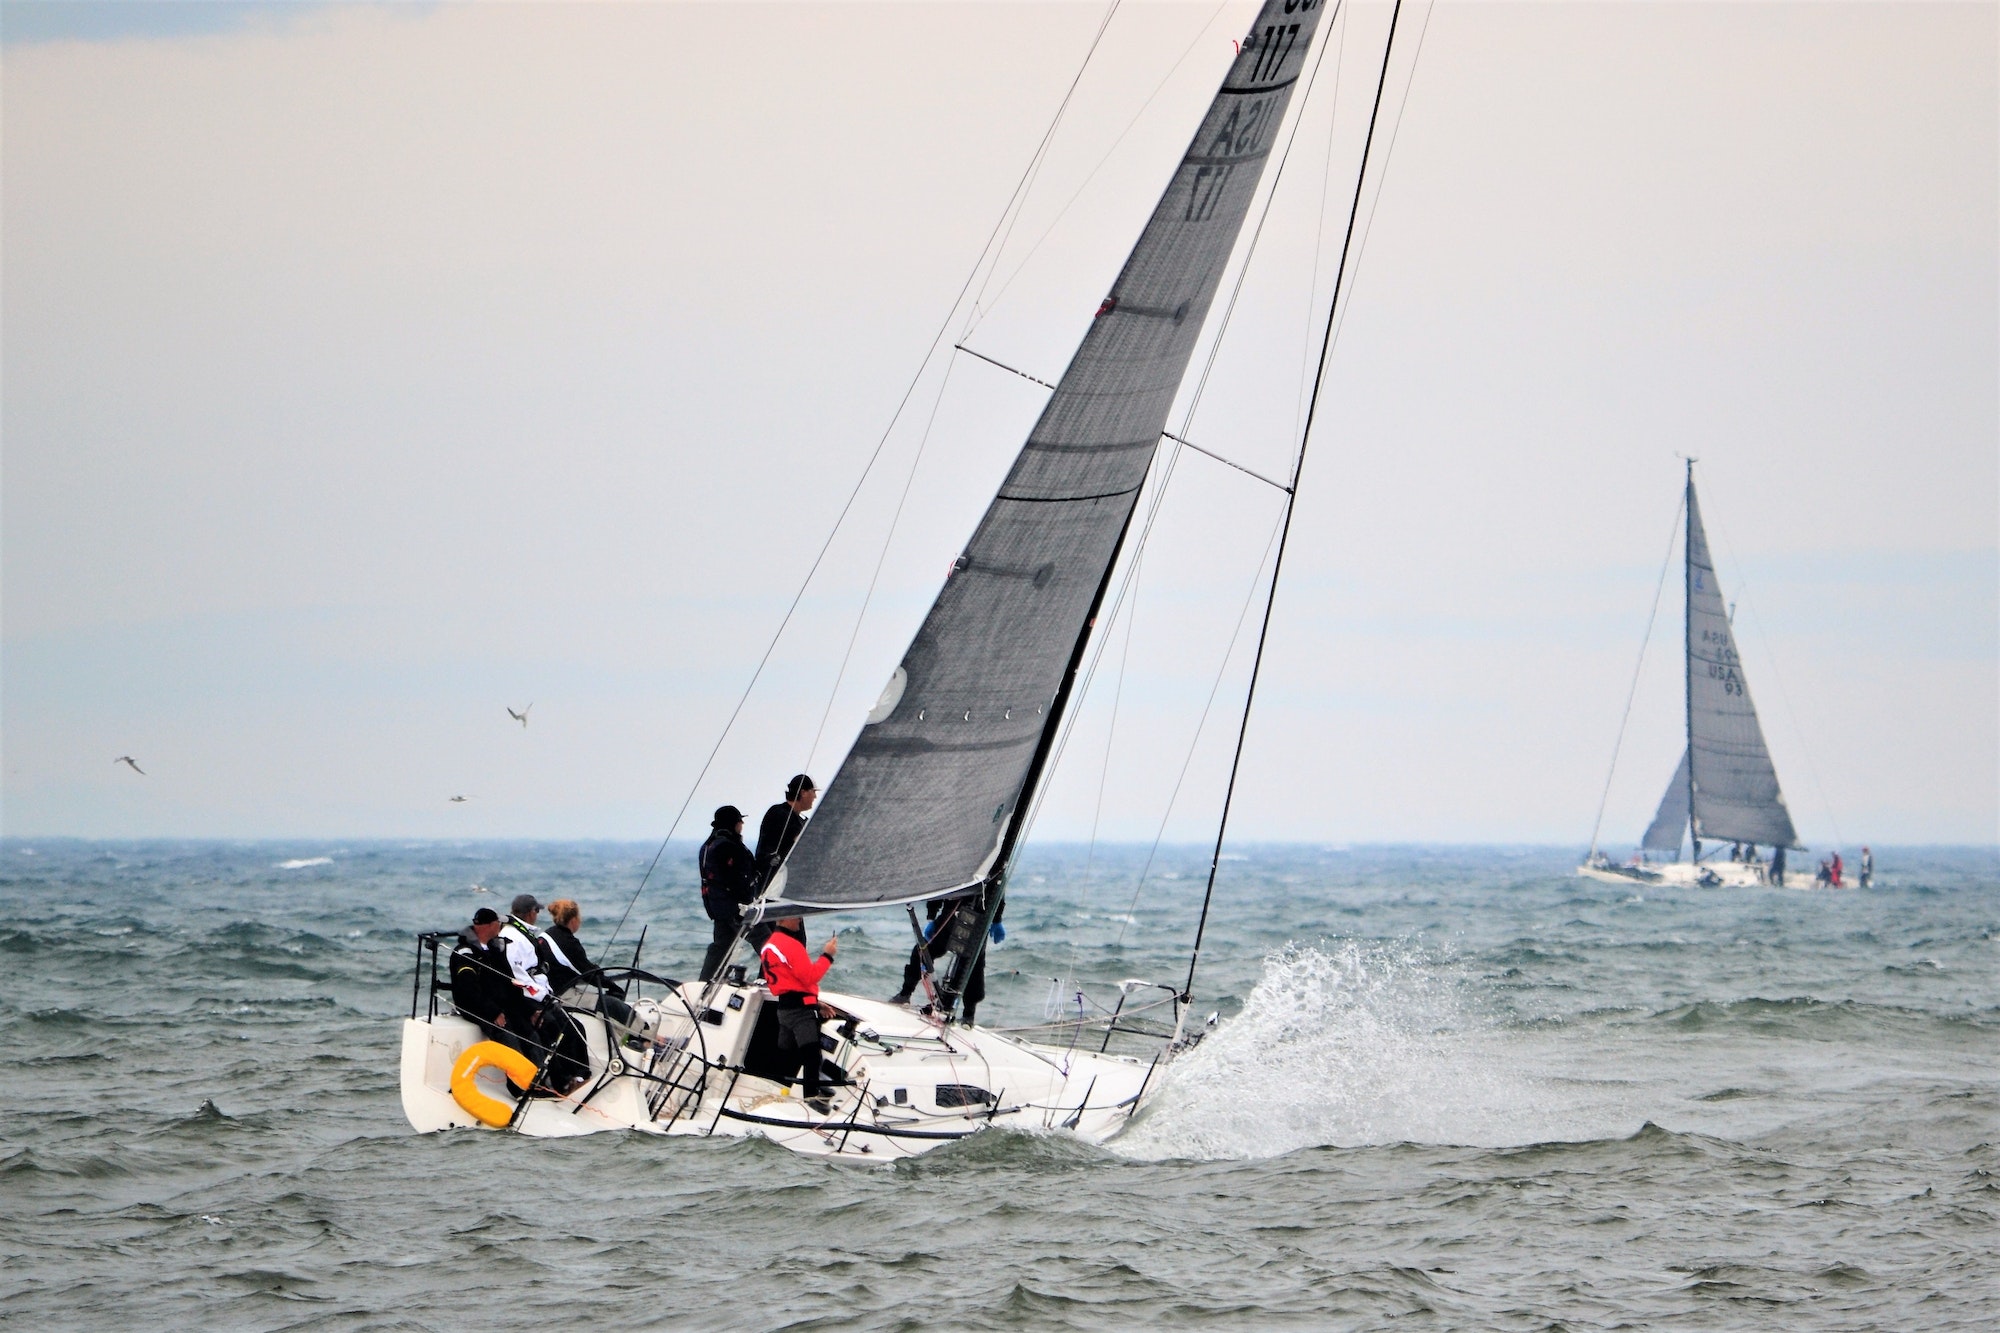 Water sports activities sailing on sailboat on Lake Michigan